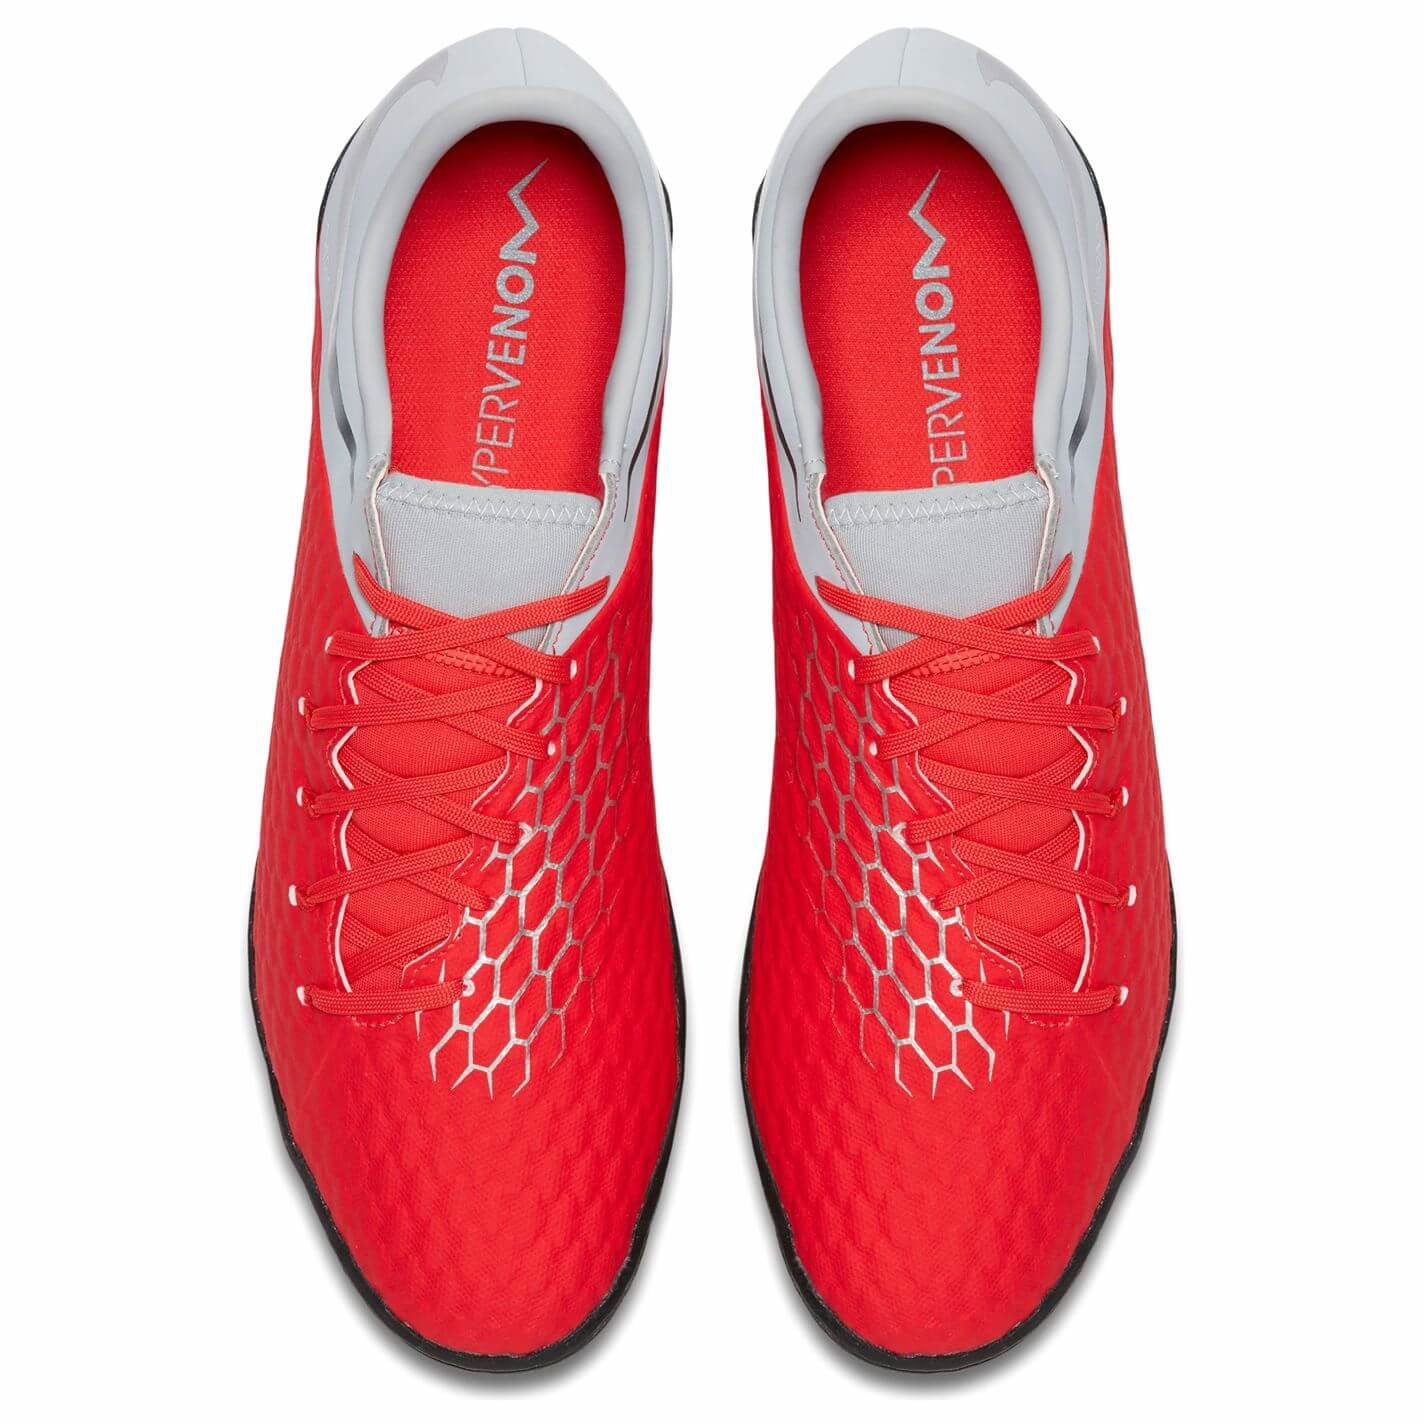 Nike Hypervenom Phelon III